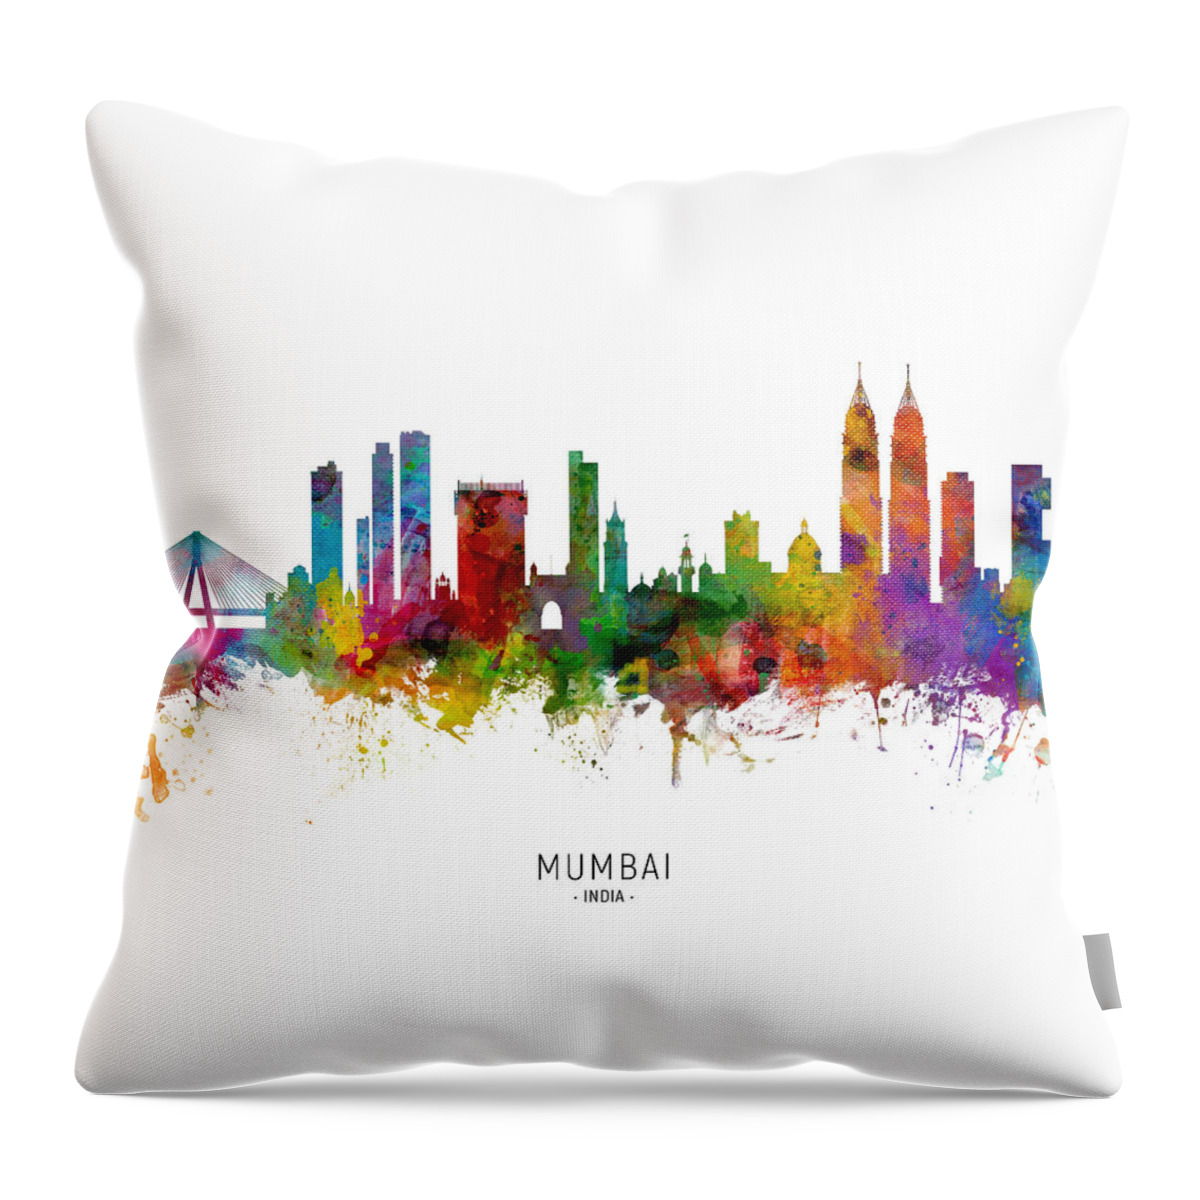 Mumbai Throw Pillow featuring the digital art Mumbai Skyline India Bombay by Michael Tompsett